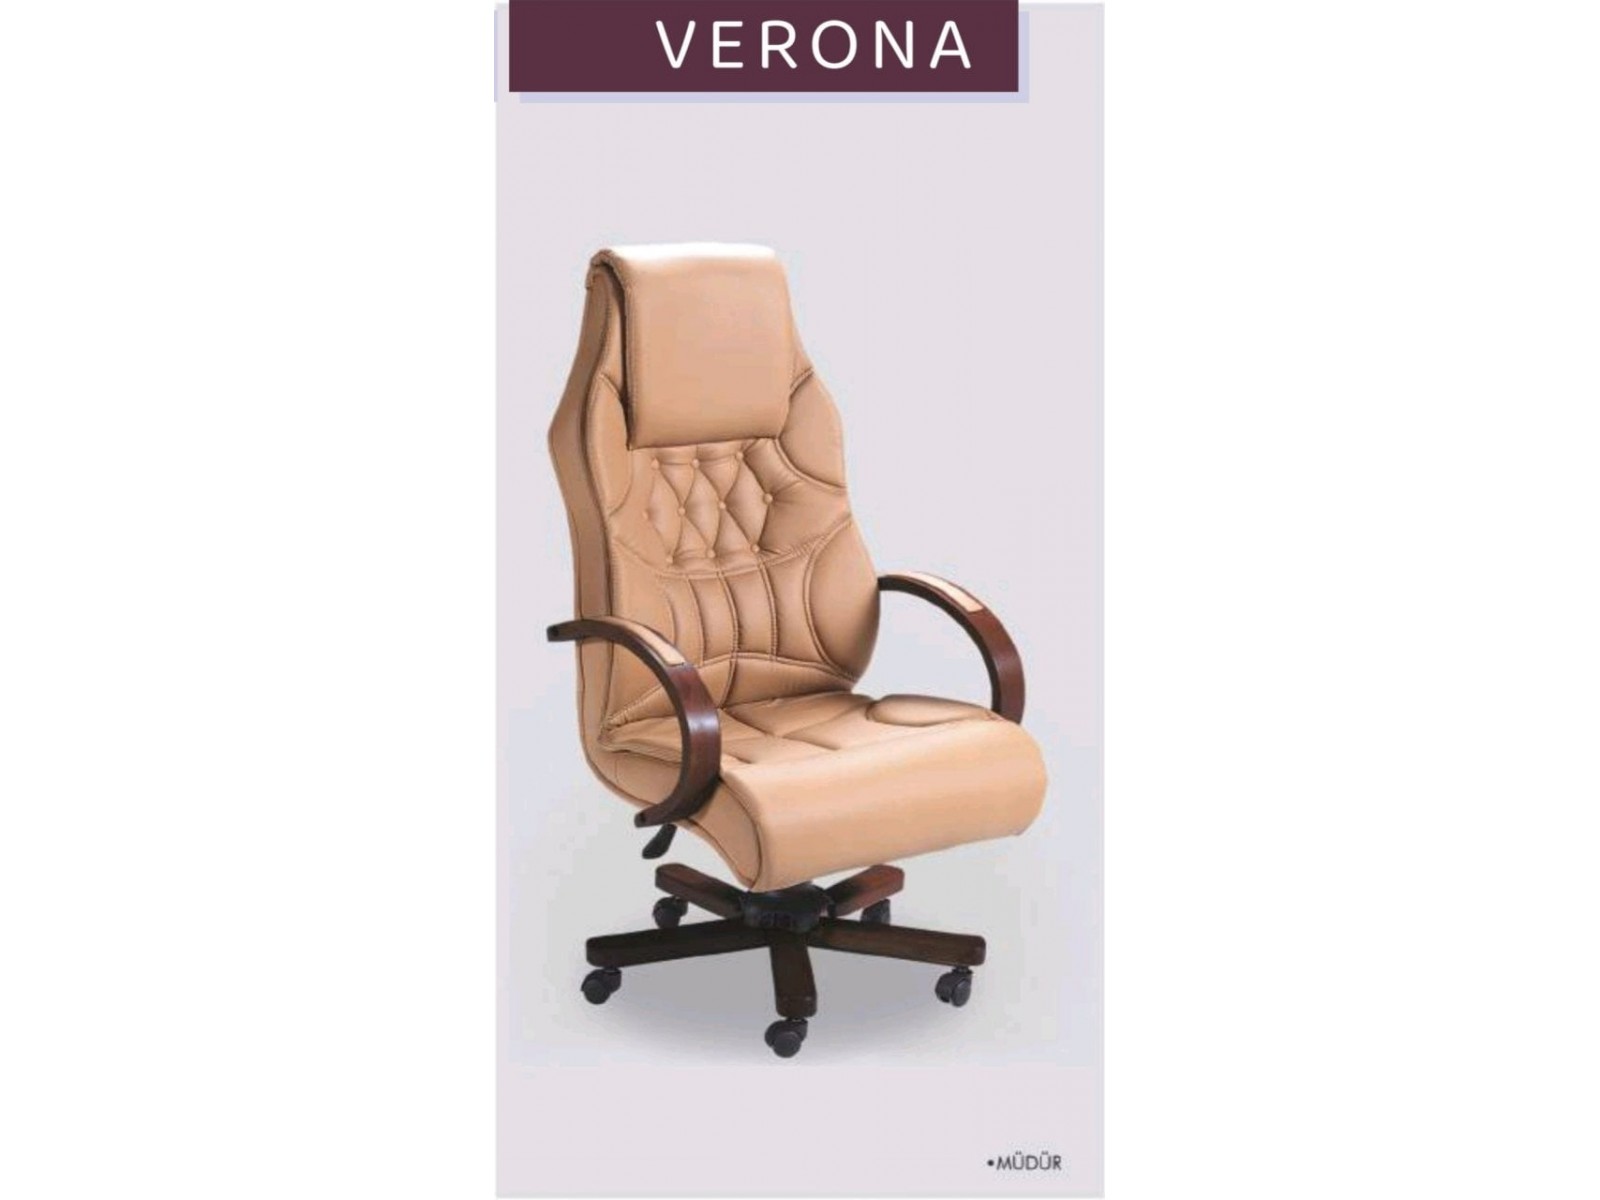 Verona makam koltuğu